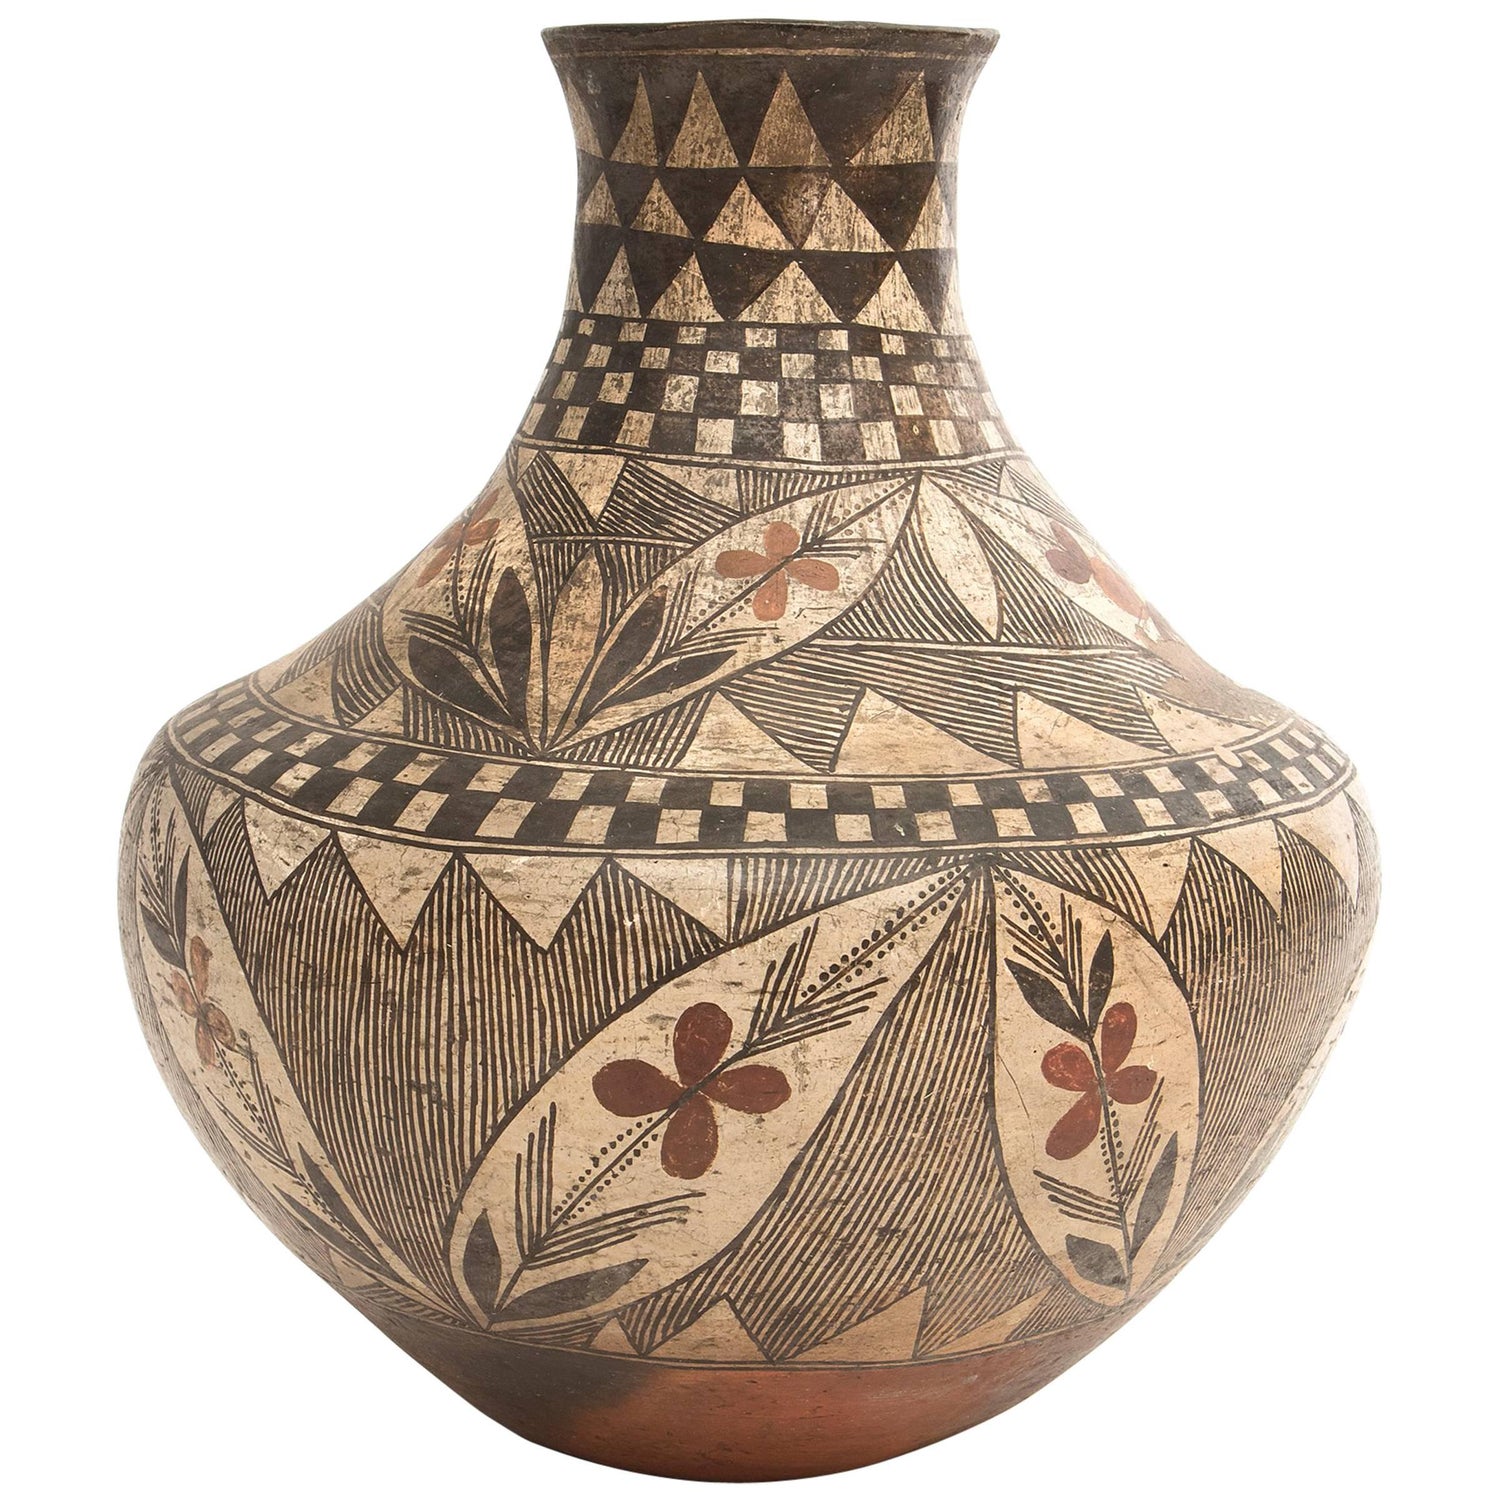 Abieta Isleta signed Native American Collectible Pottery Isleta Pueblo New Mexican Small Handcrafted Vase-Black White Clay Vessel-d.f